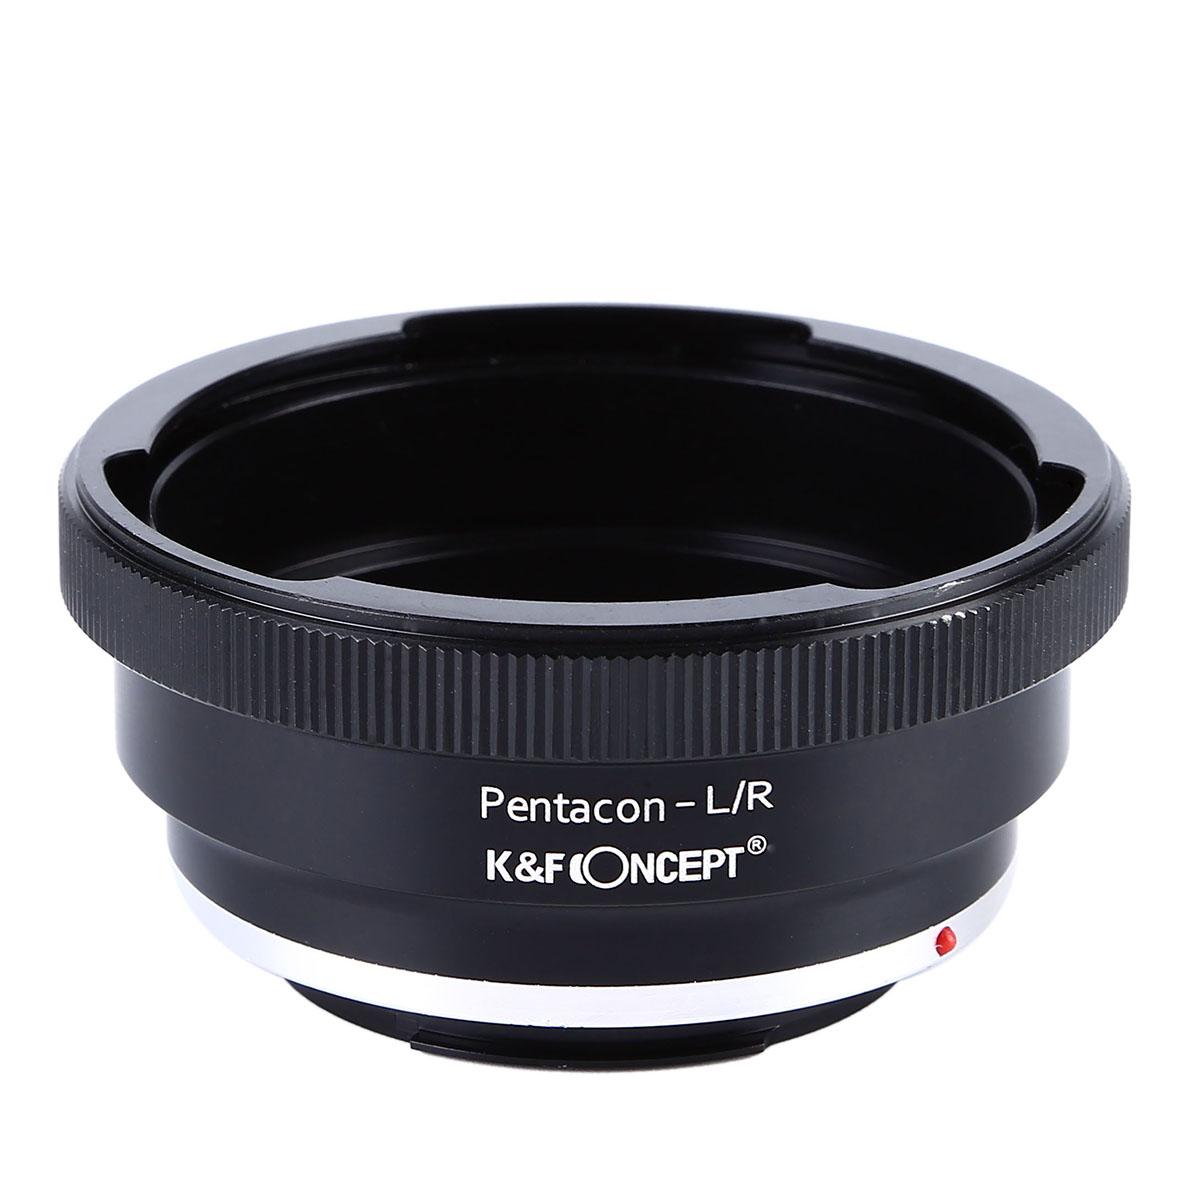 K&F Concept Pentacon 6 Kiev 60 Lenses to Leica R Lens Mount Adapter K&F Concept M27321 Lens Adapter